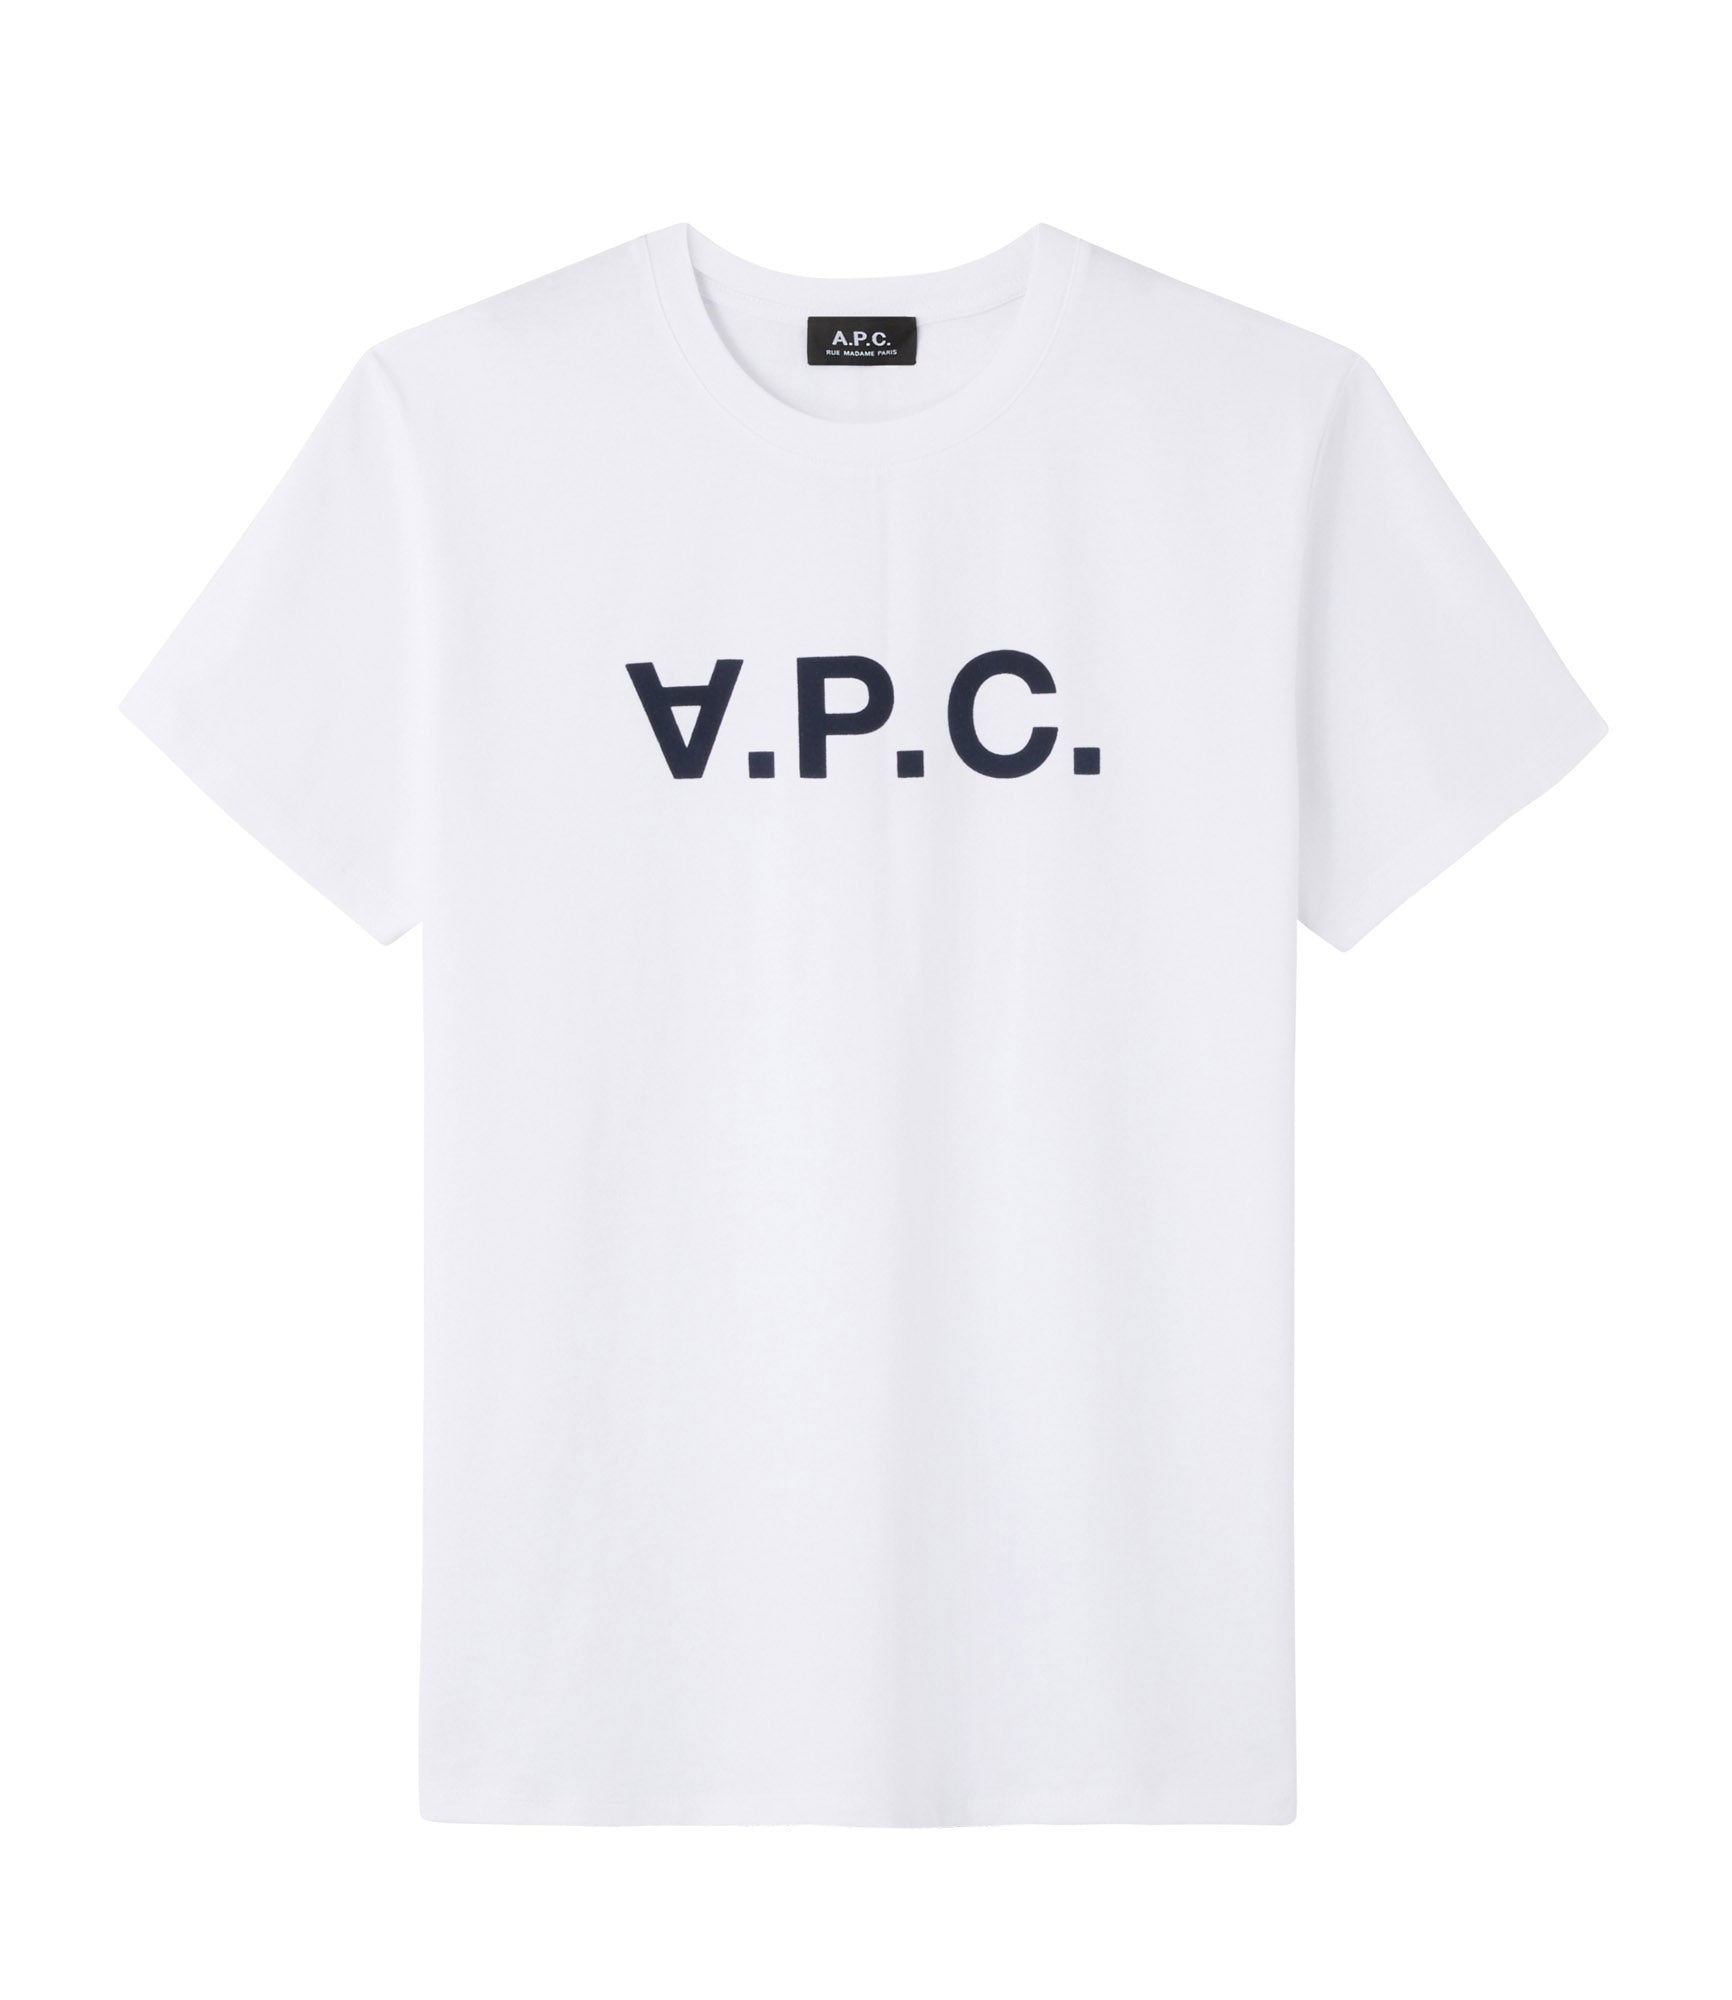 Væve gjorde det Mundskyl White VPC T-shirt - Organic jersey | A.P.C. Ready to Wear